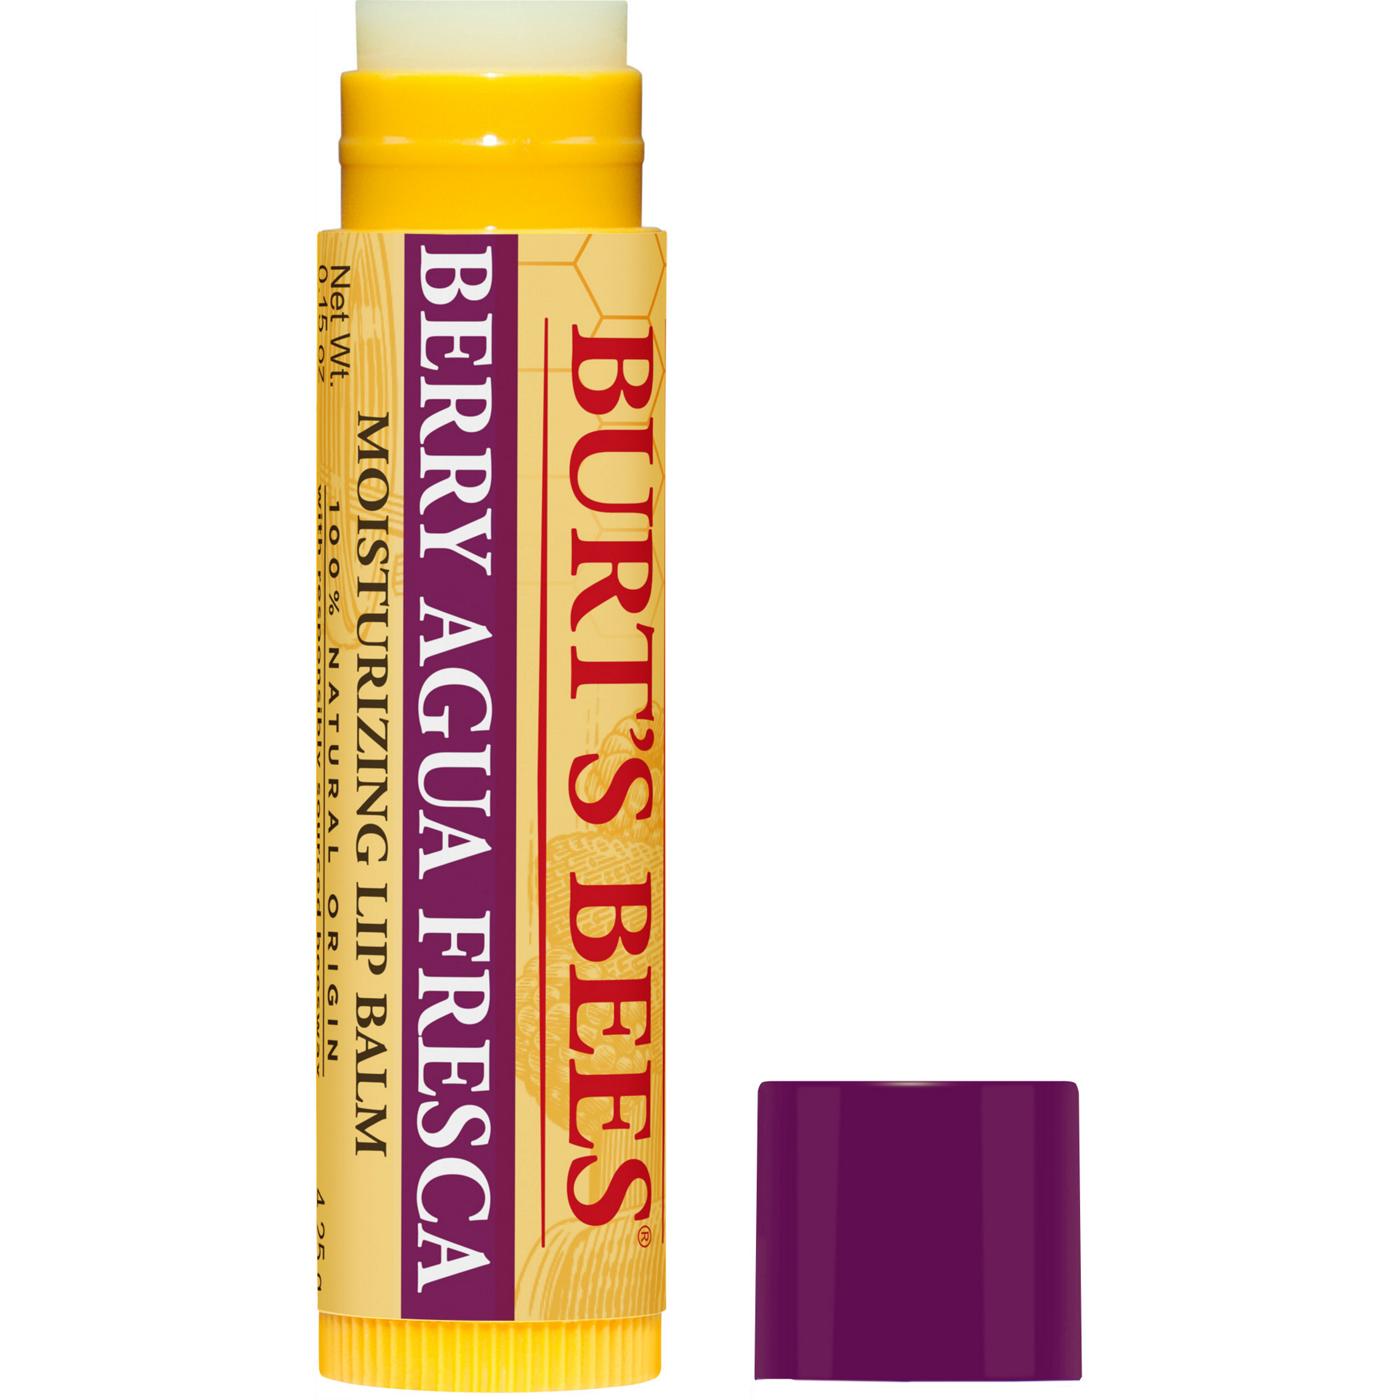 Burt's Bees 100% Natural Origin Moisturizing Lip Balm - Berry Agua Fresca; image 9 of 11